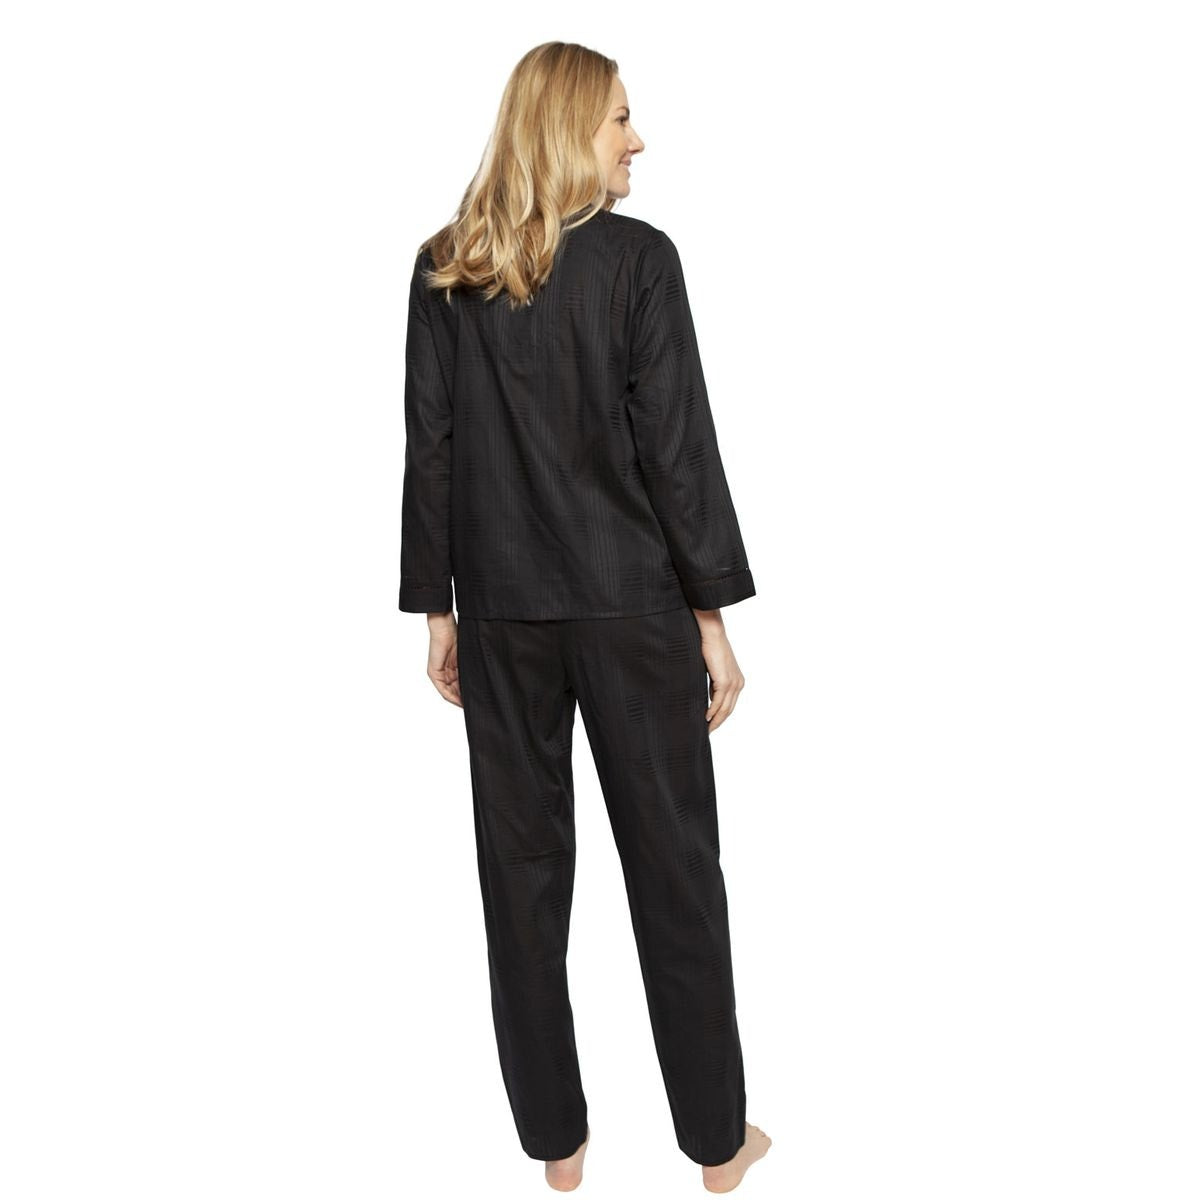 Nora Rose 100% Lawn Cotton Woven Check Long Sleeve Pajama Set